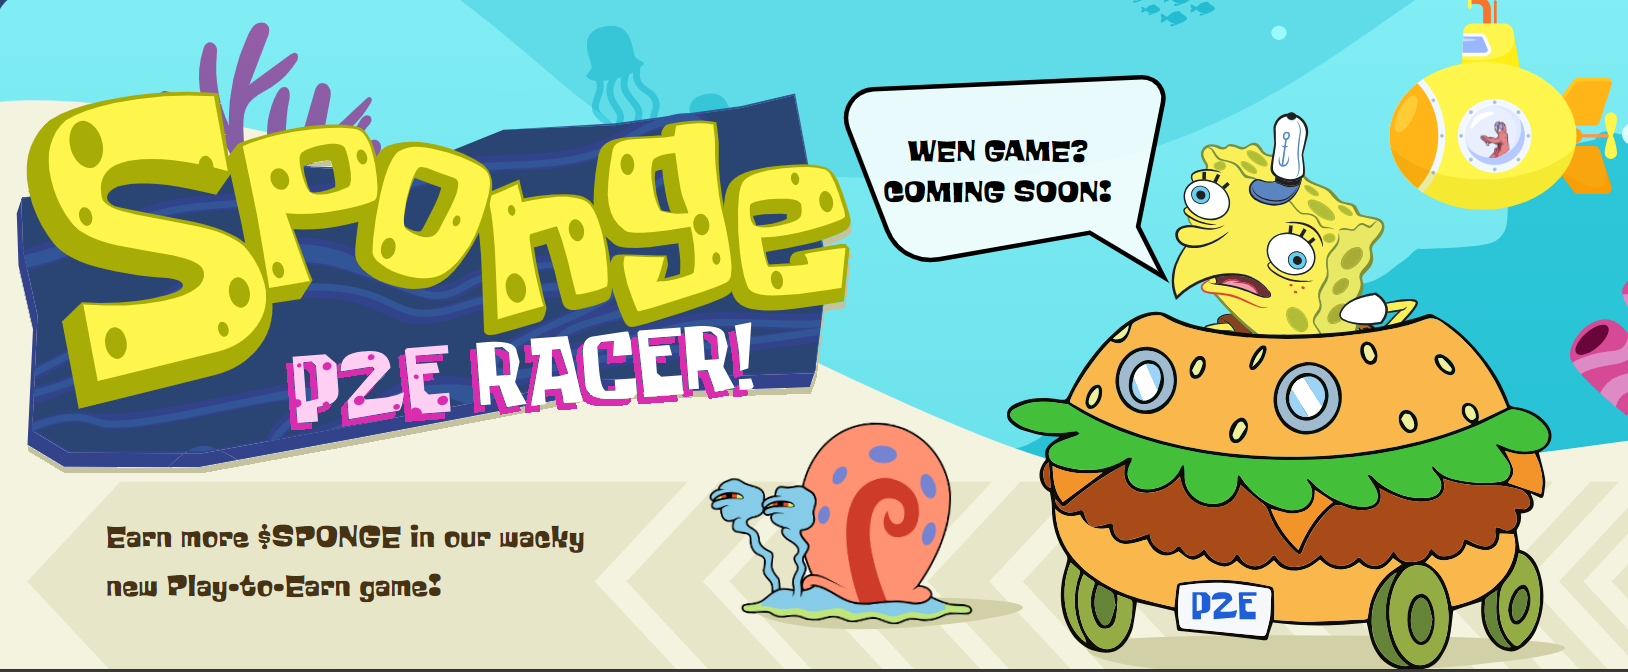 Sponge P2E racer game gaming icos